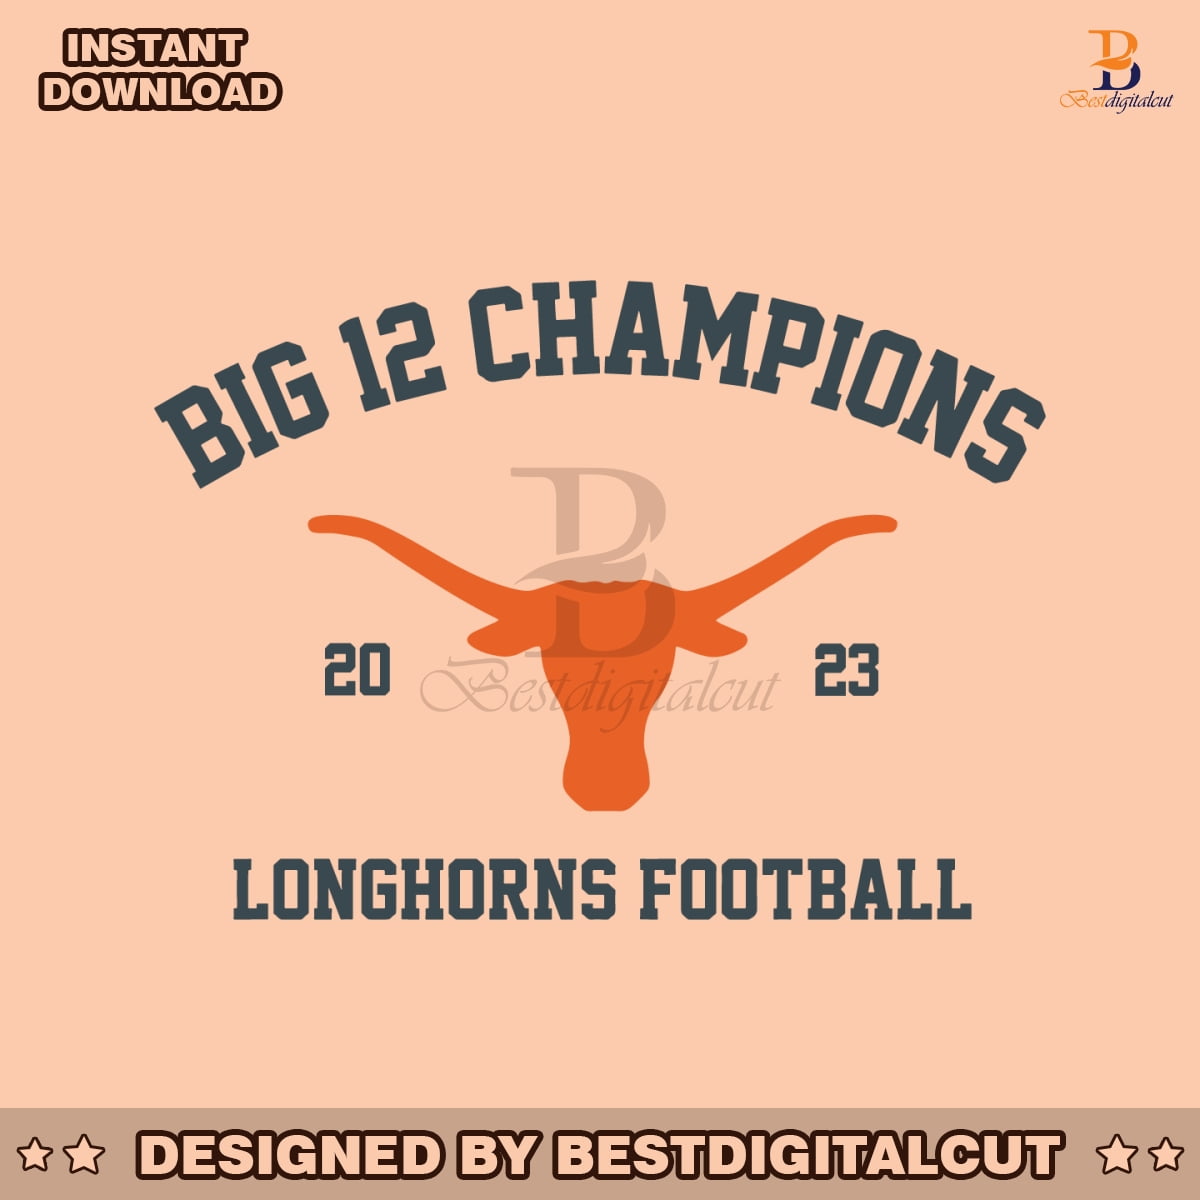 big-12-champions-longhorns-football-svg